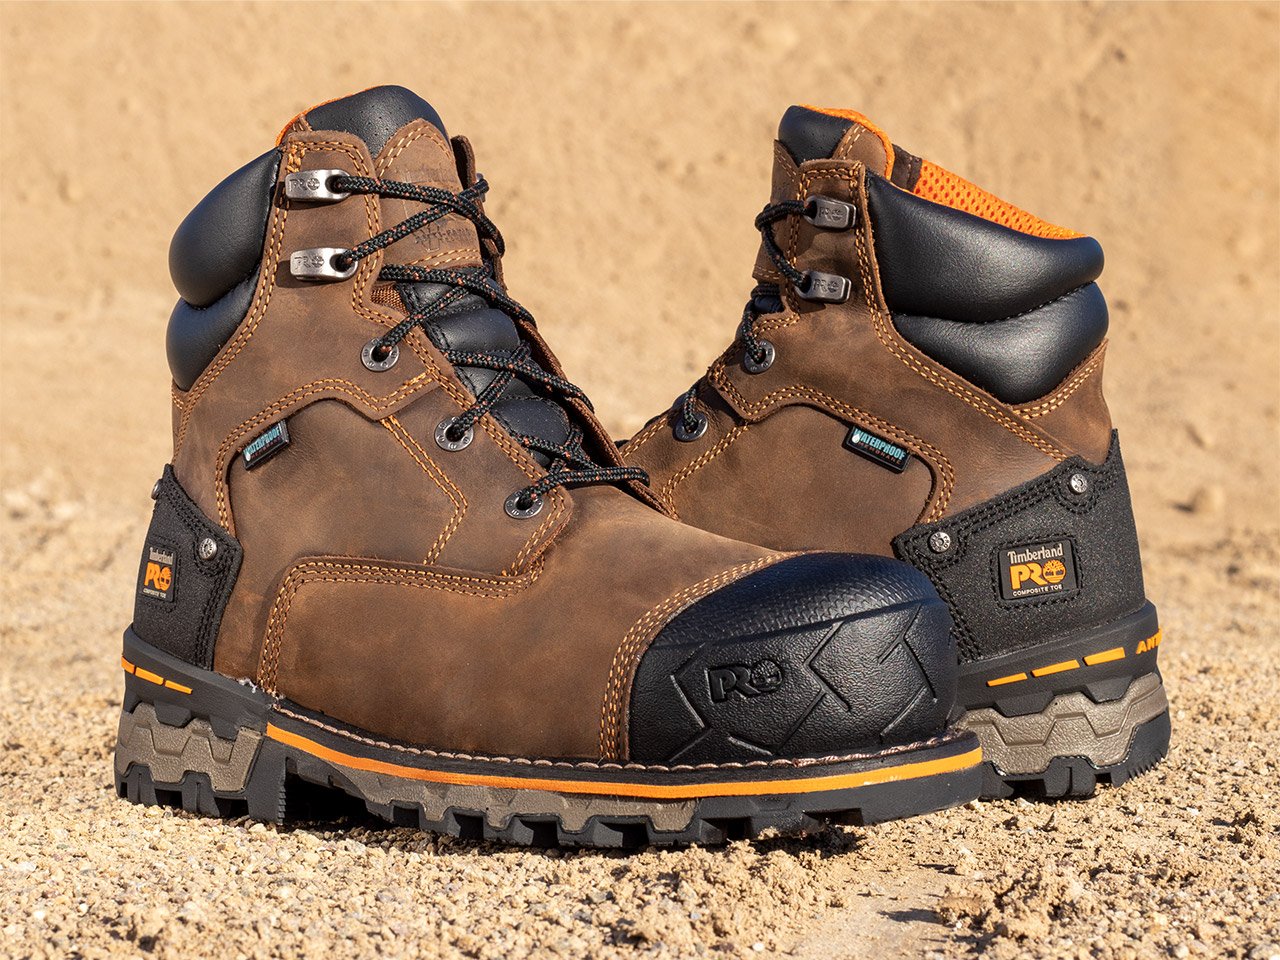 Pro Heavy Duty Comfortable Hard Wearing Work Safety Ankle Boots Steel Toe Cap 